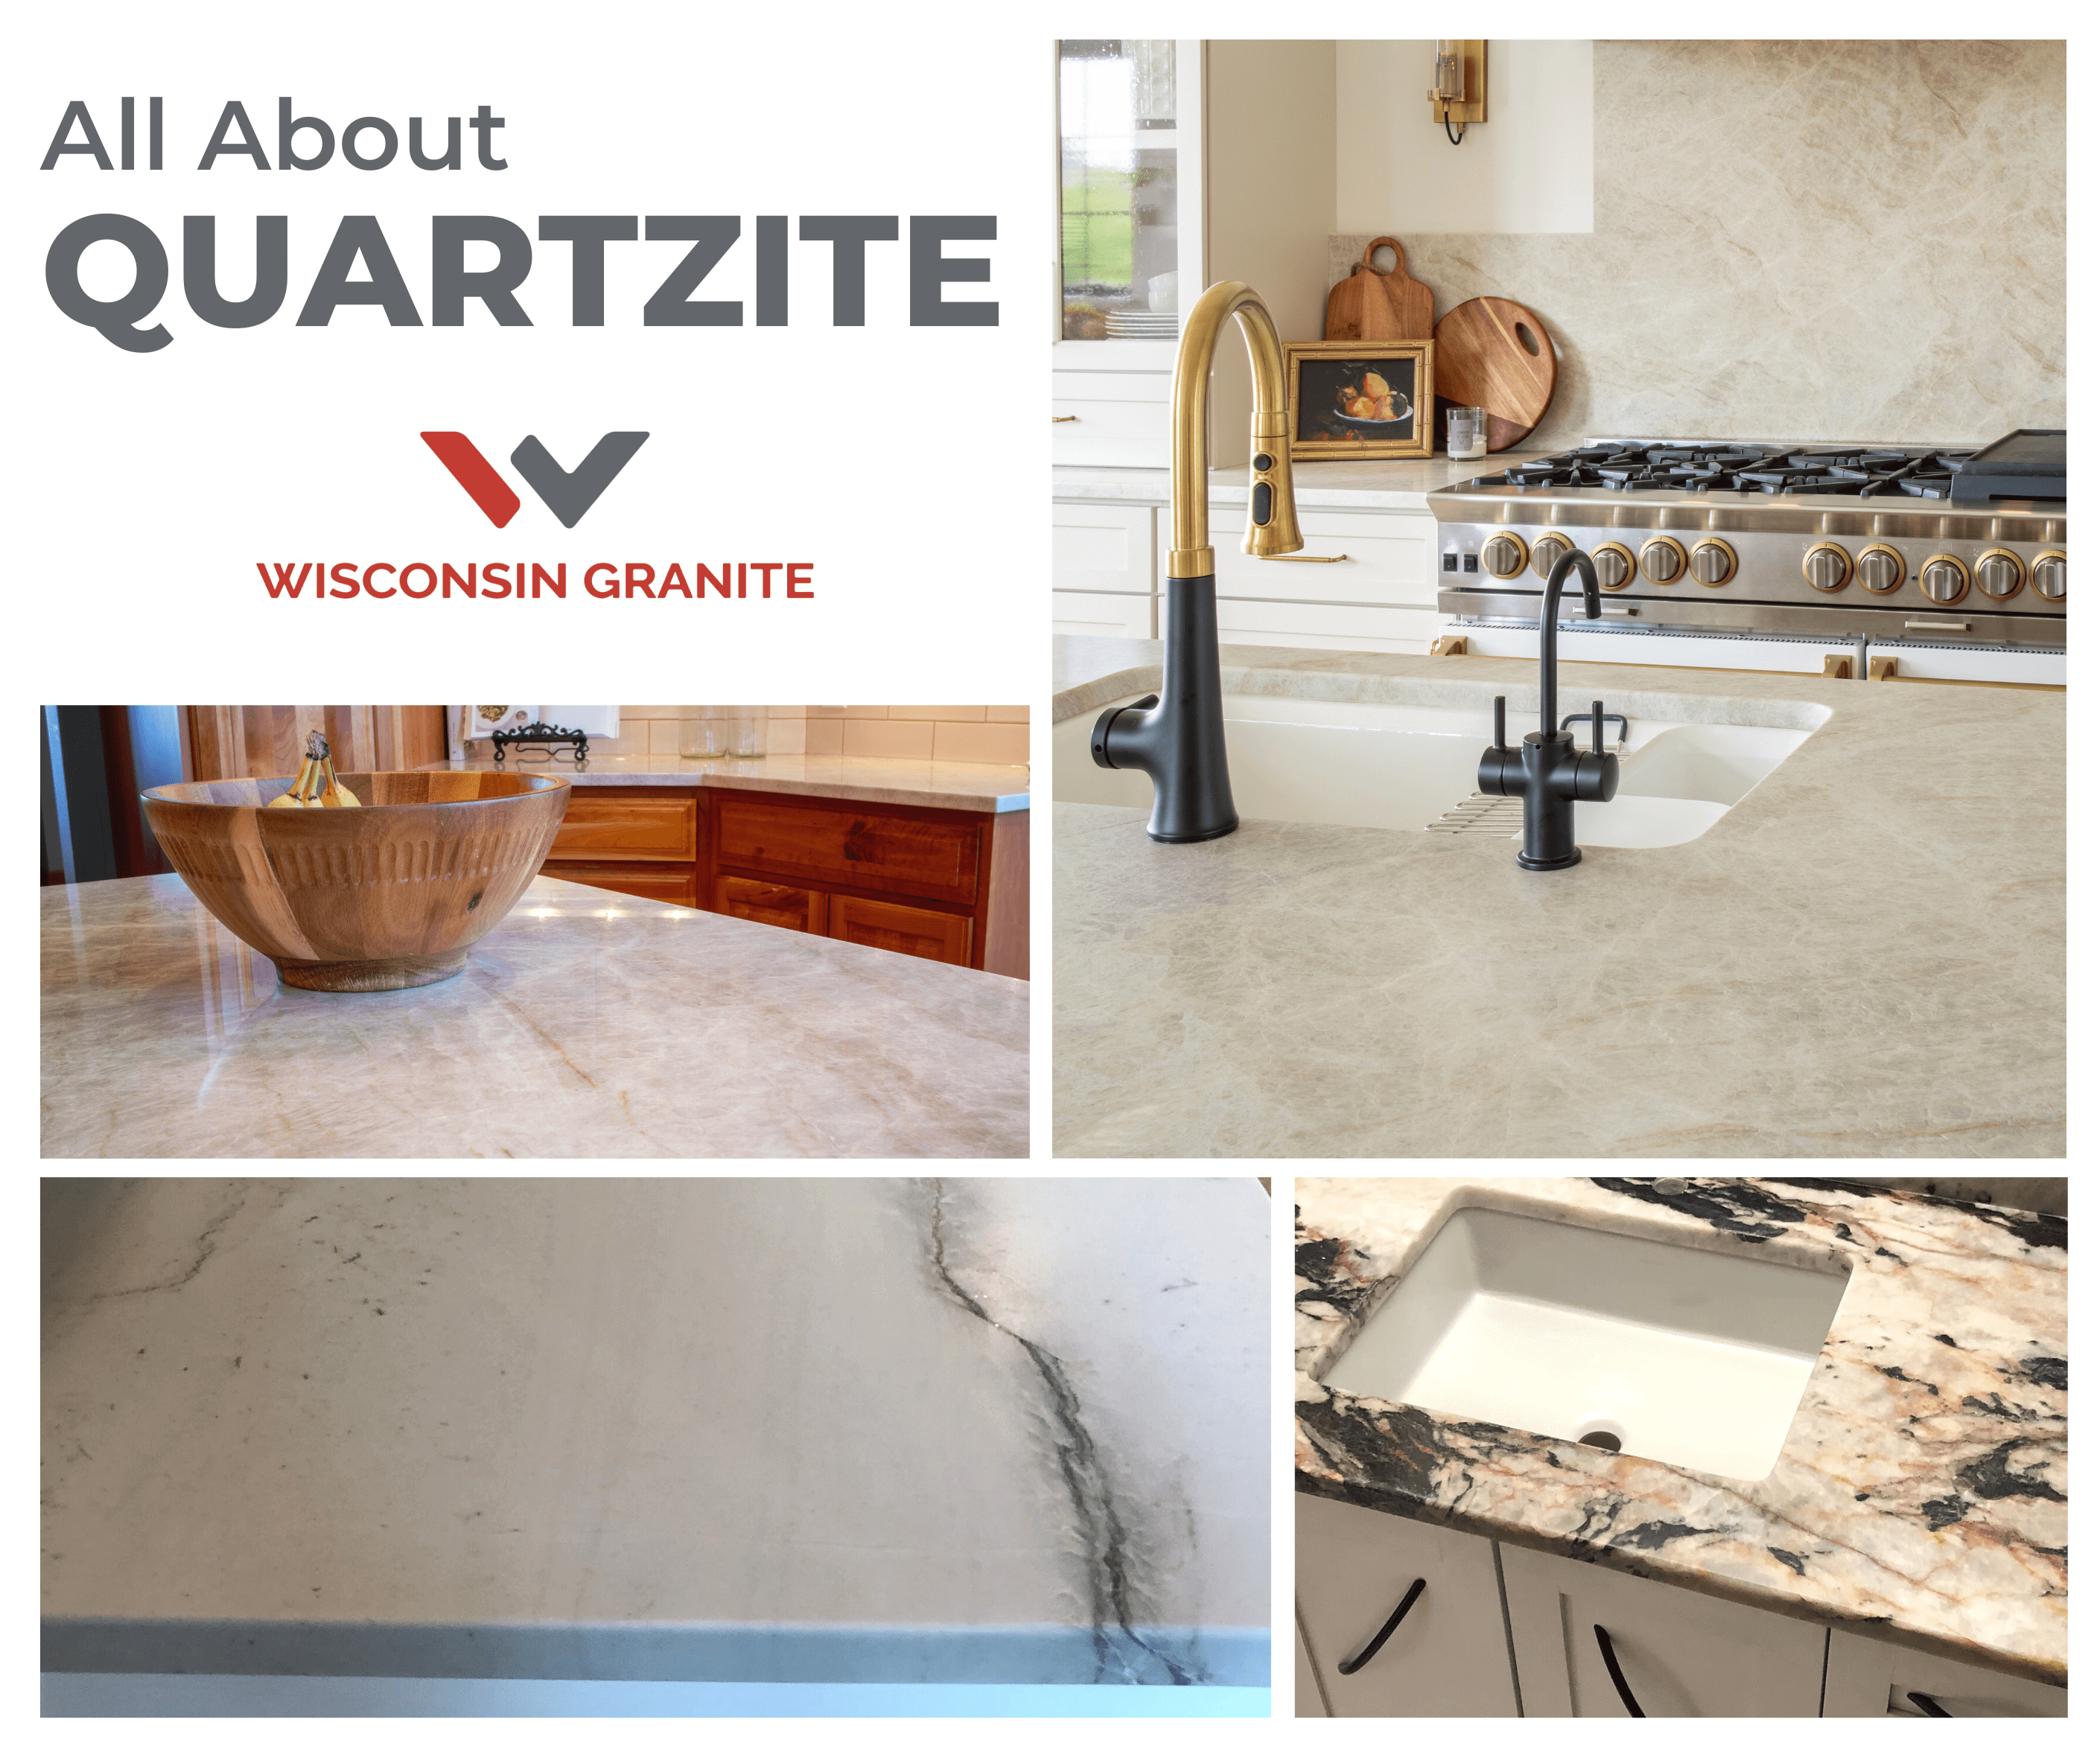 All About Quartzite